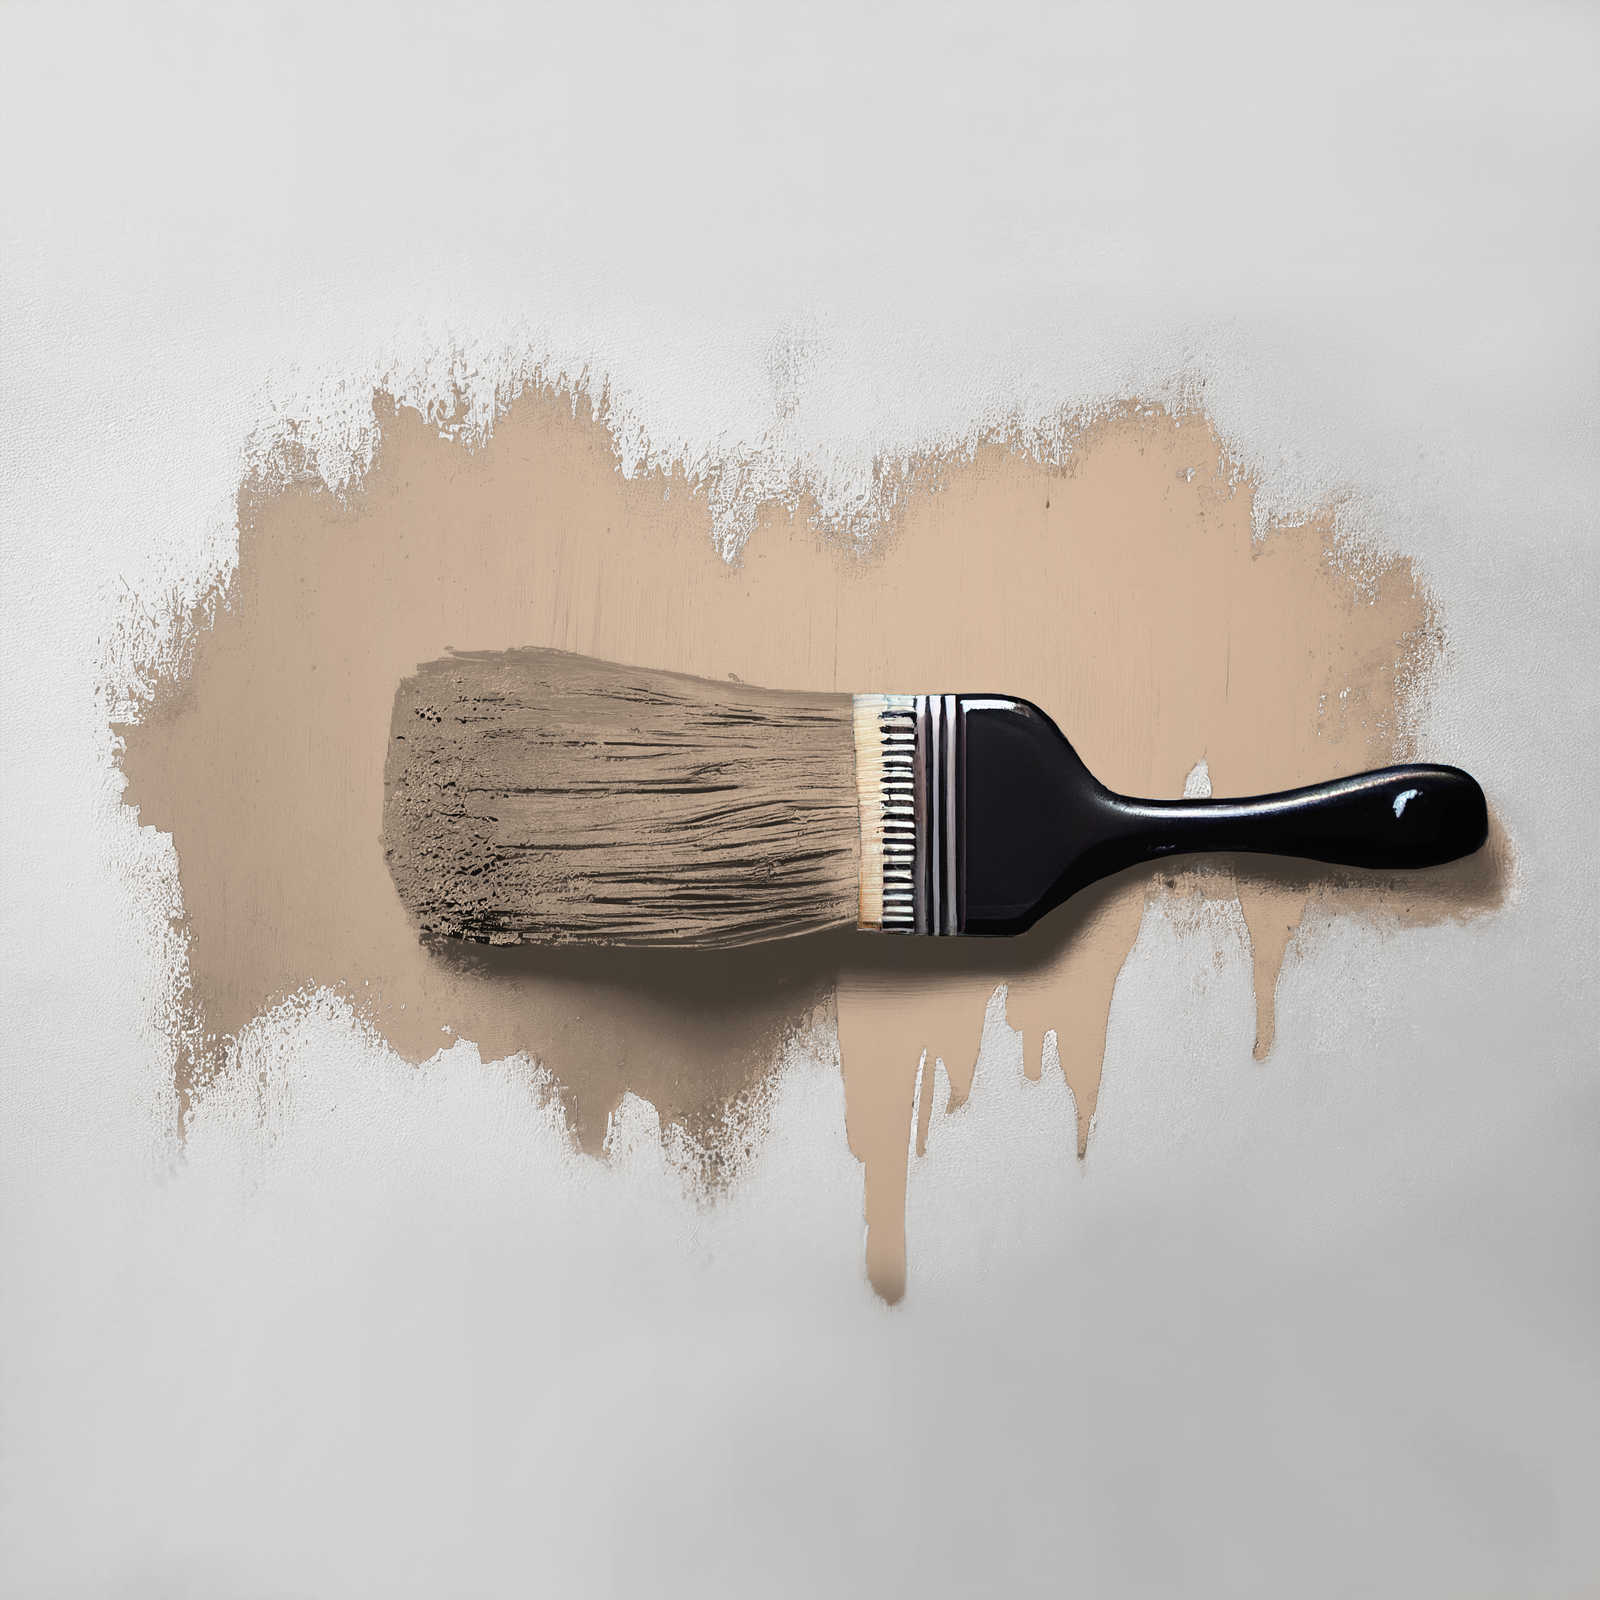             Peinture murale TCK6010 »Latte Macchhiato« en beige naturel – 2,5 litres
        